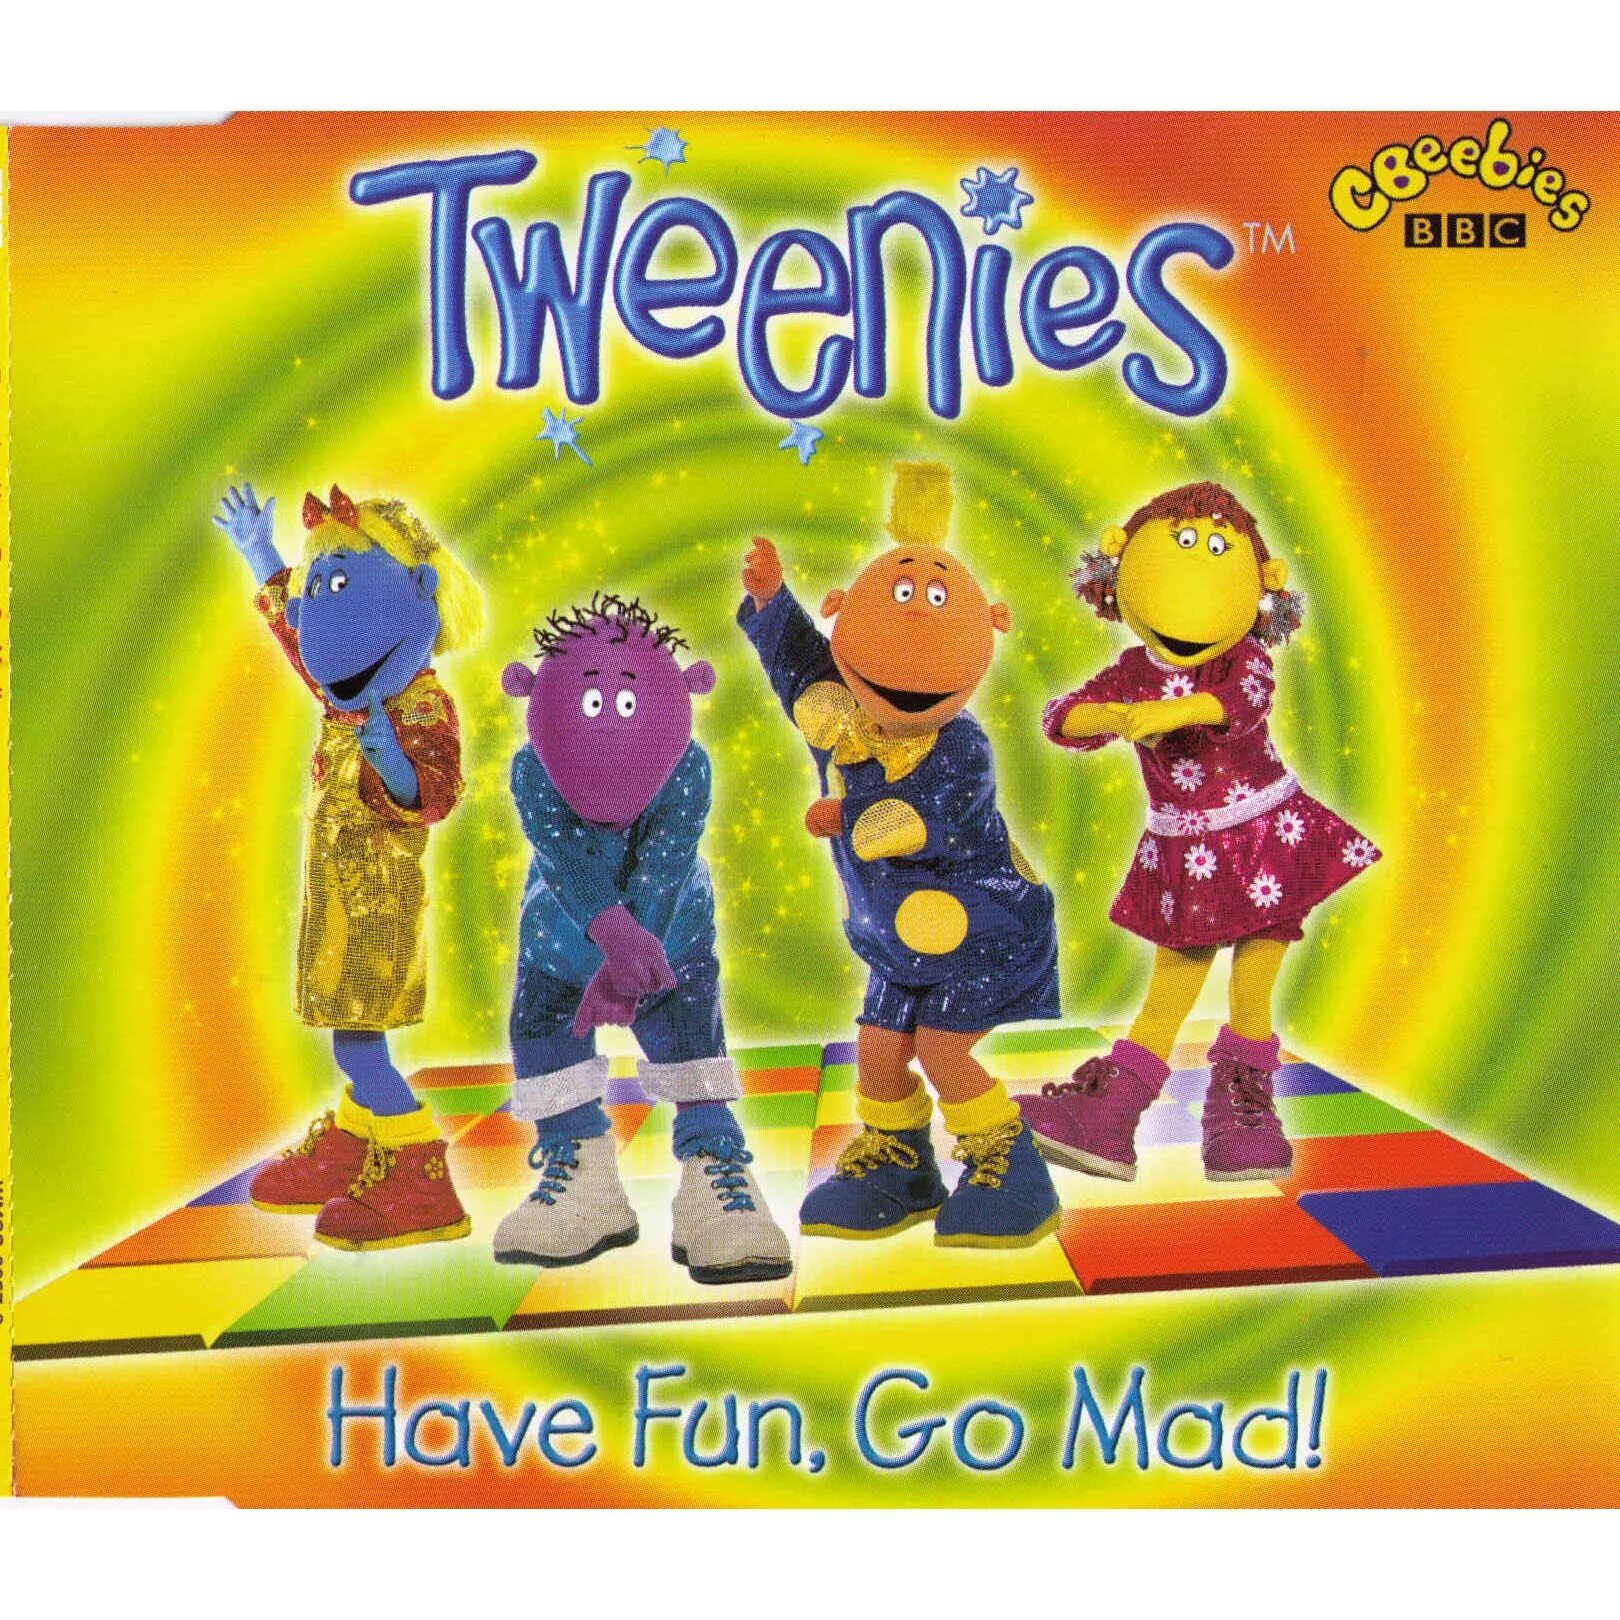 Fun ready. Твинисы. Tweenies 2002. Tweenies CD. Твинисы кассета.